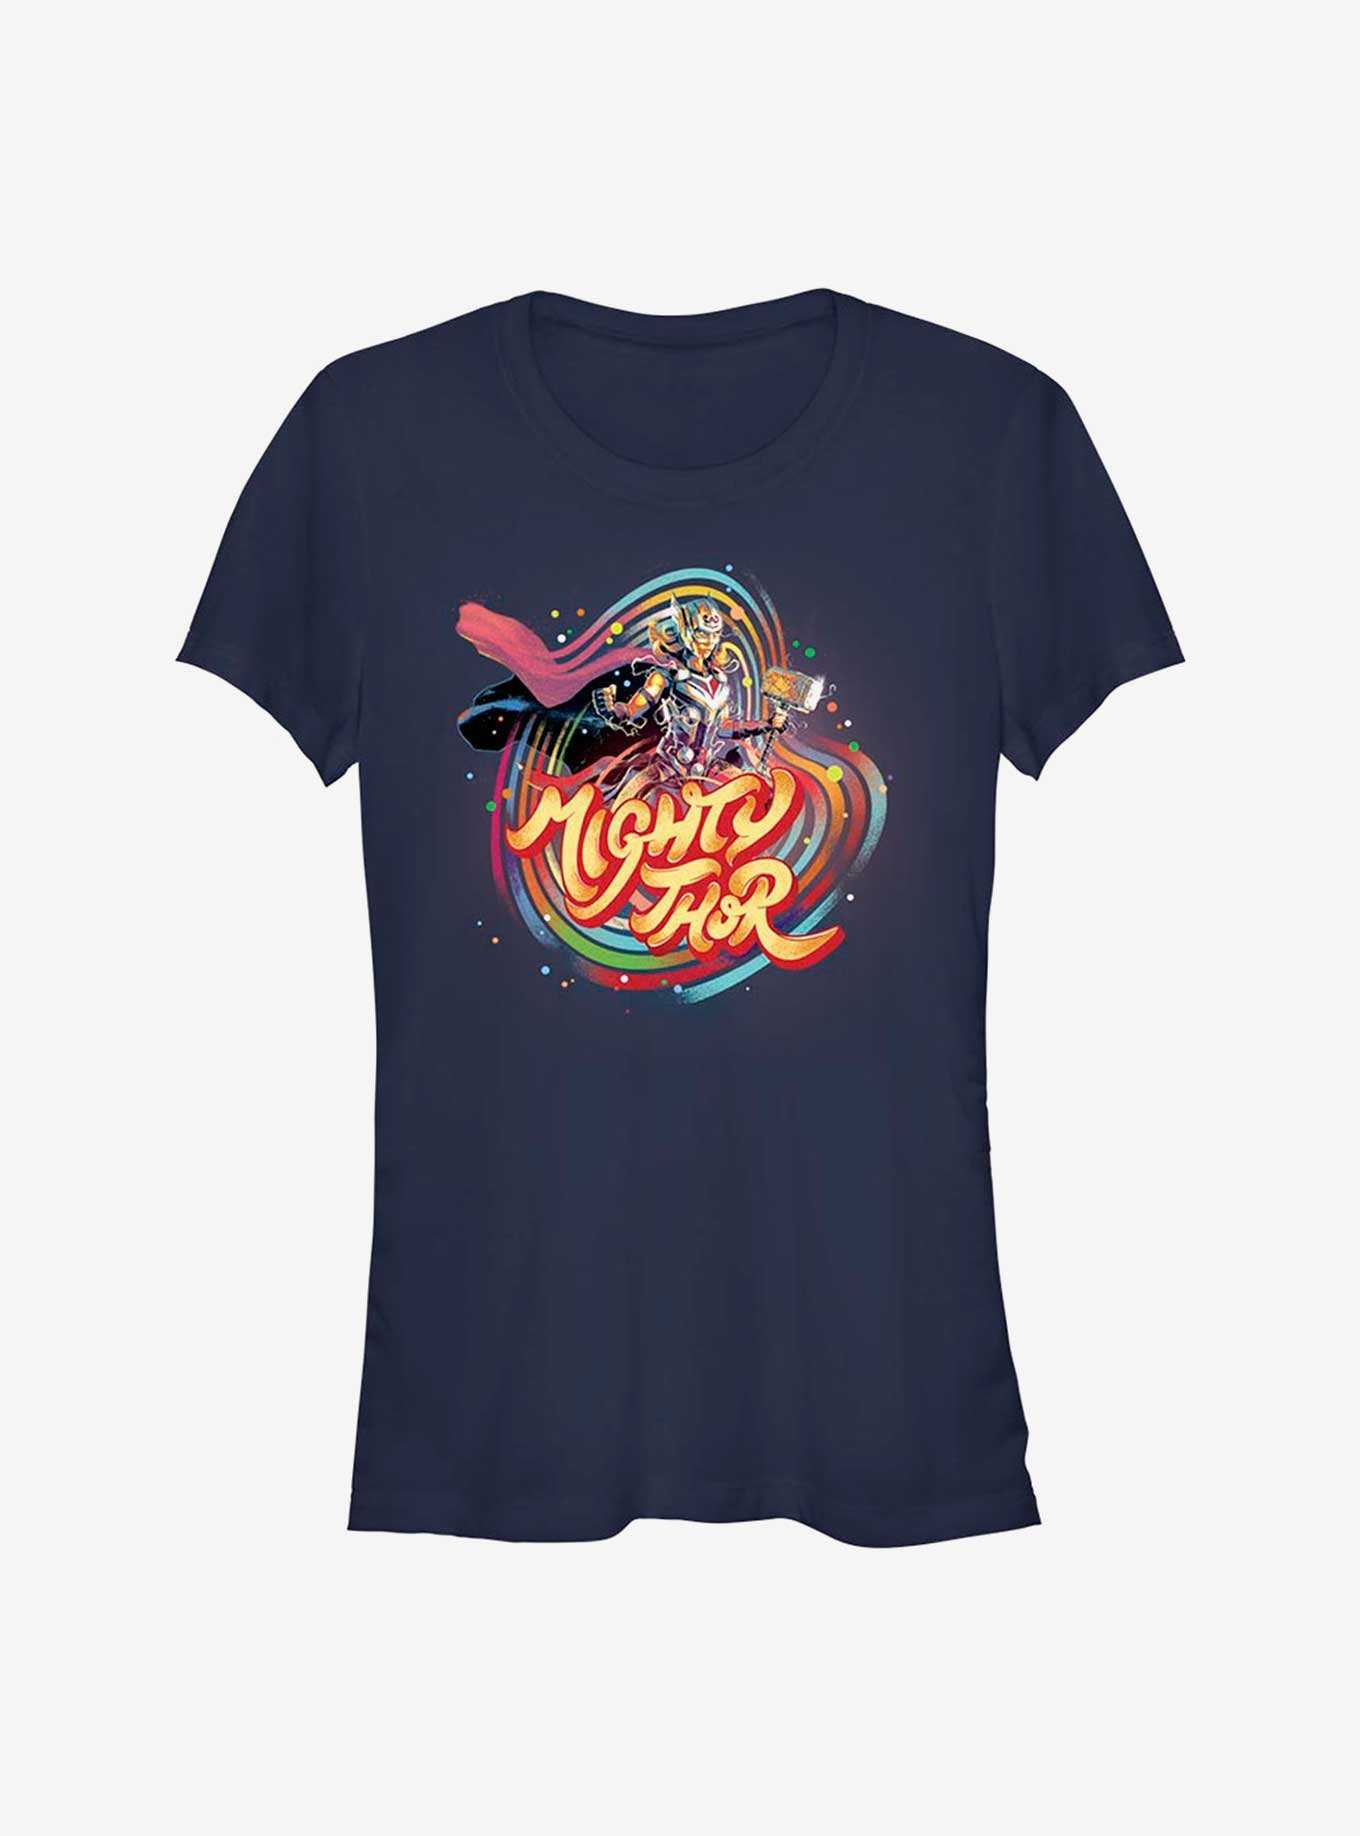 Marvel Thor: Love and Thunder Swishy Mighty Thor Girls T-Shirt, , hi-res